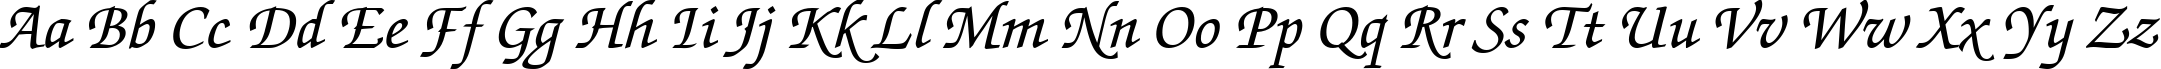 Пример написания английского алфавита шрифтом Zapf Chancery Medium Italic BT